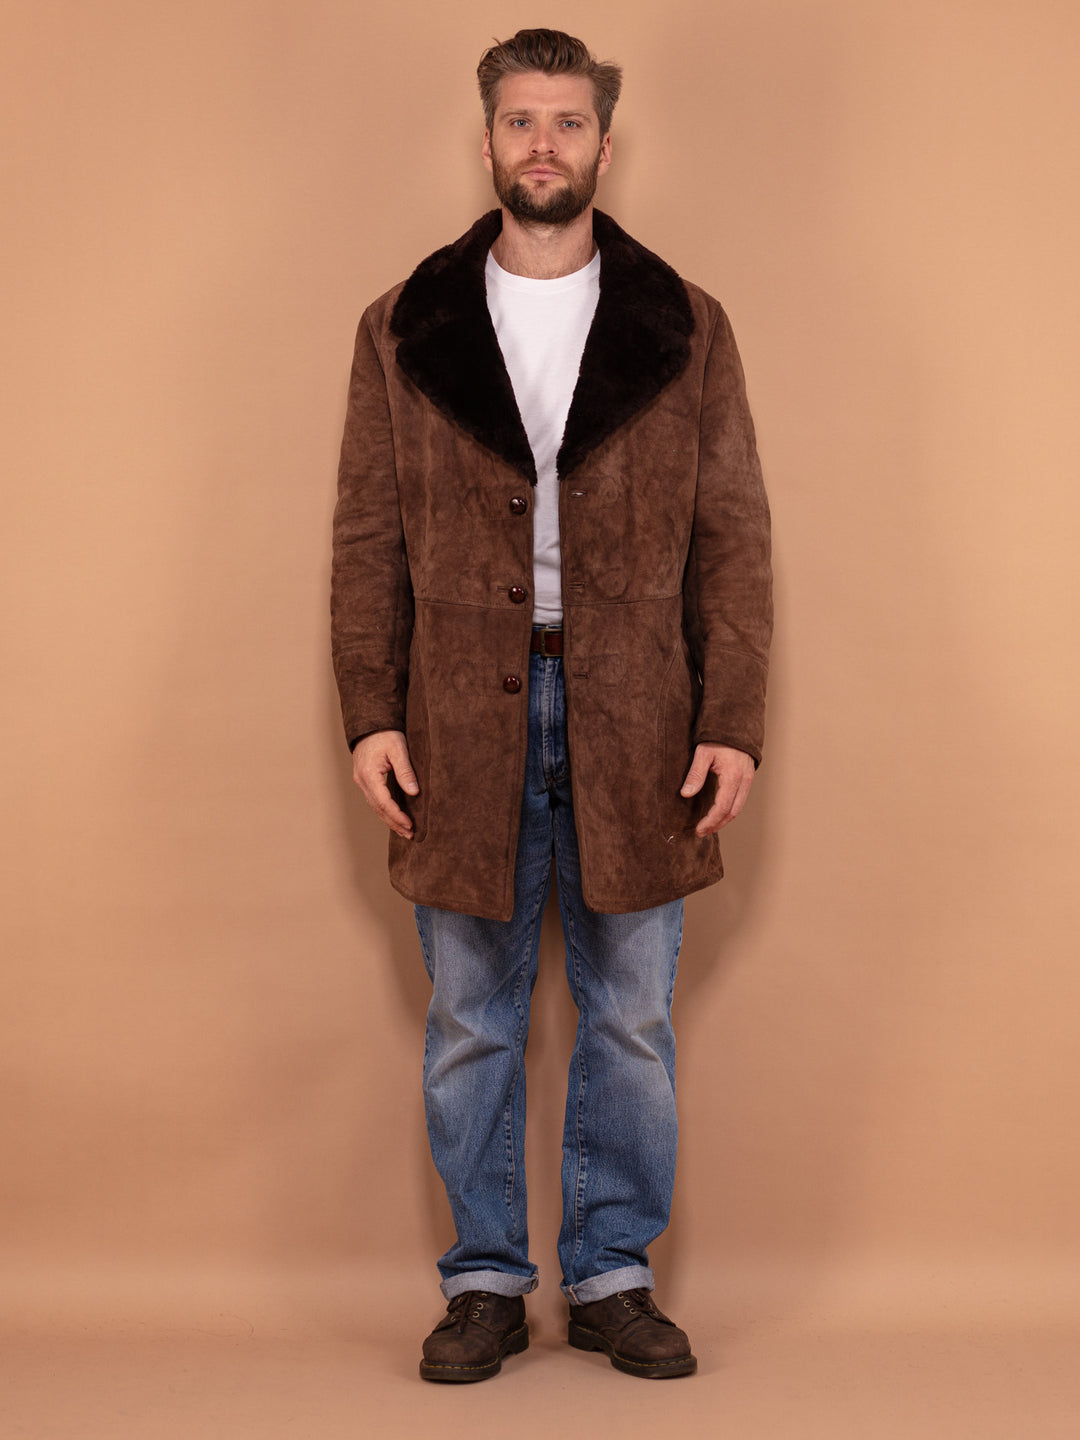 Men Shearling Suede Coat 70's, Size Large, Vintage Sheepskin Coat, Brown Suede Overcoat, Winter Outerwear, Warm Cozy Winter Coat